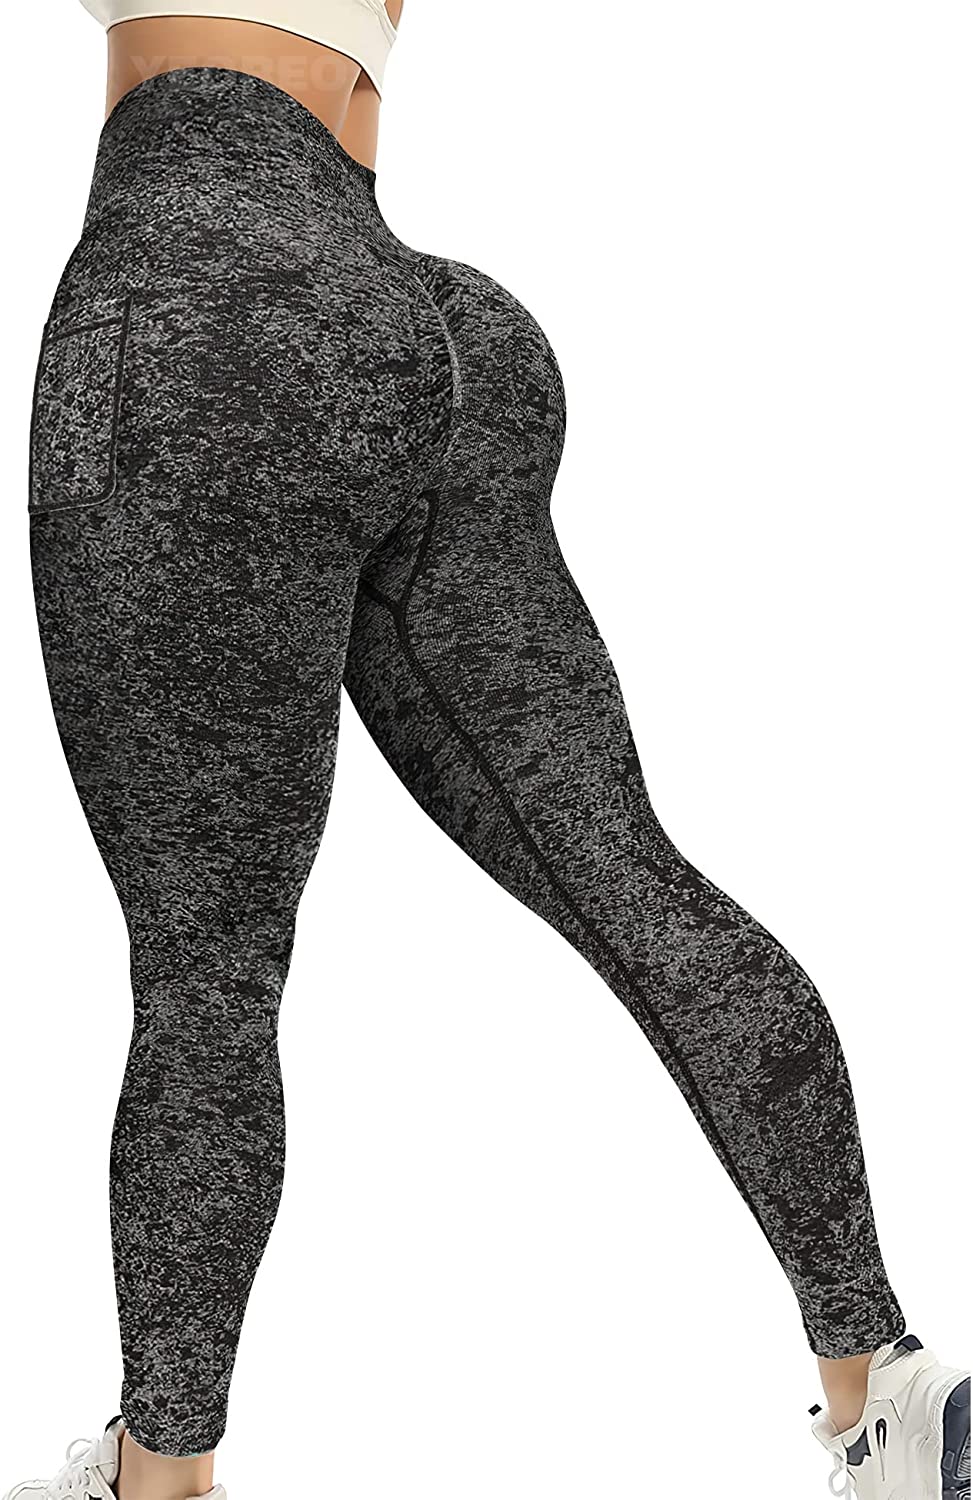 Women's Camouflage High Waisted Athletic Yoga Pants Leggings